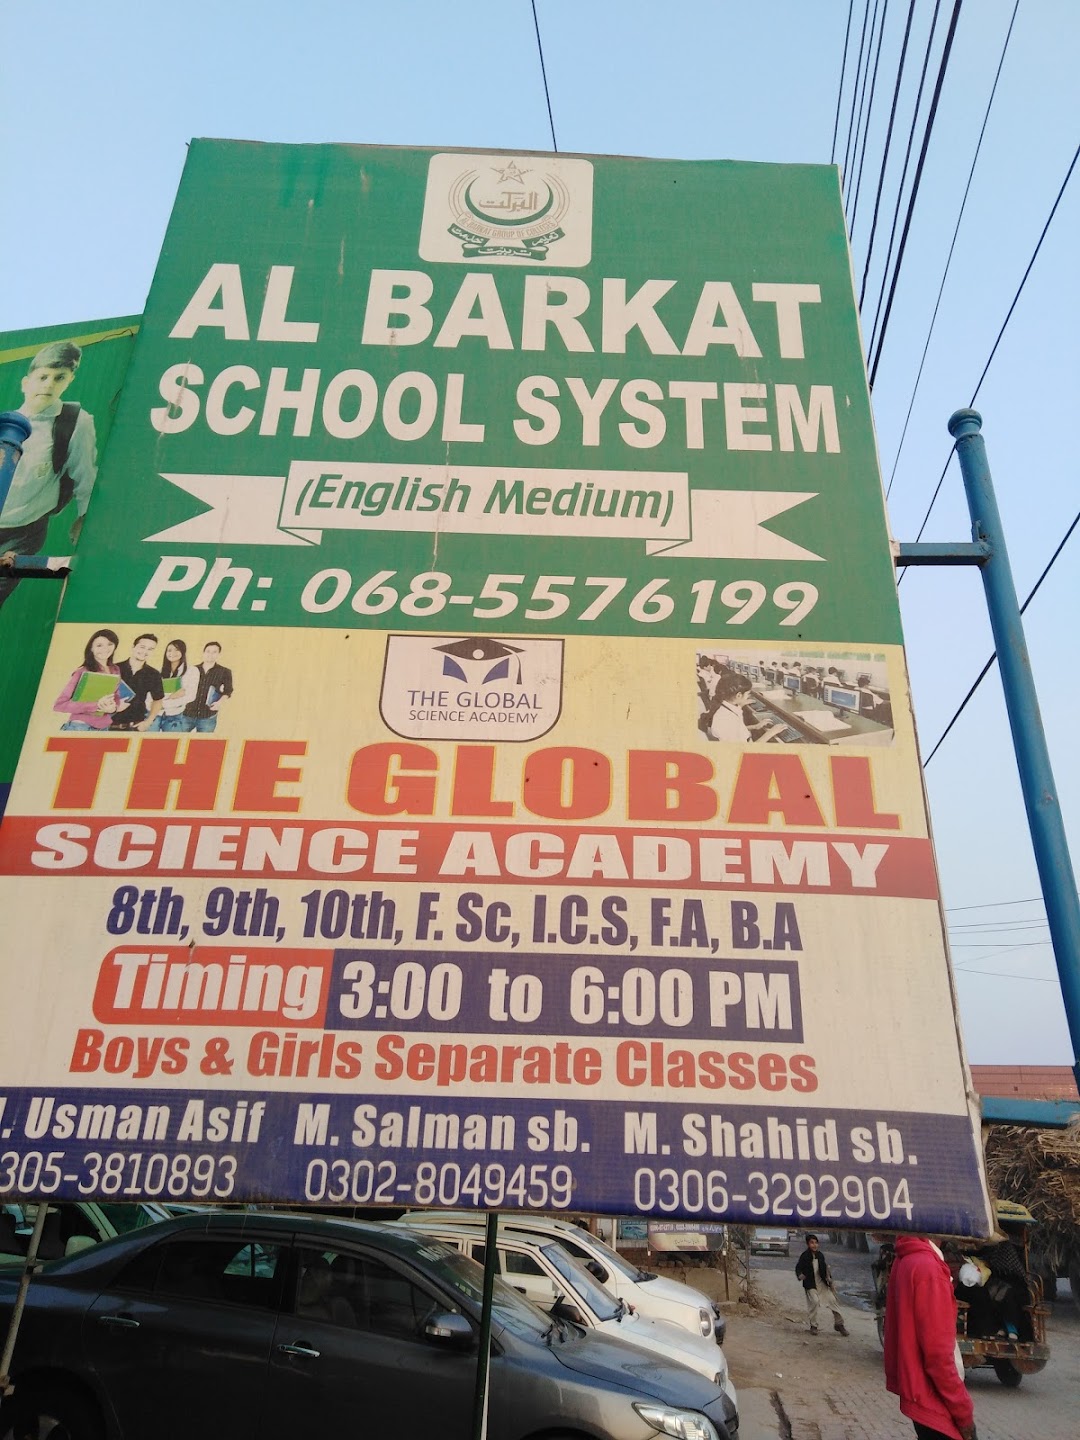 AL Barkat School System